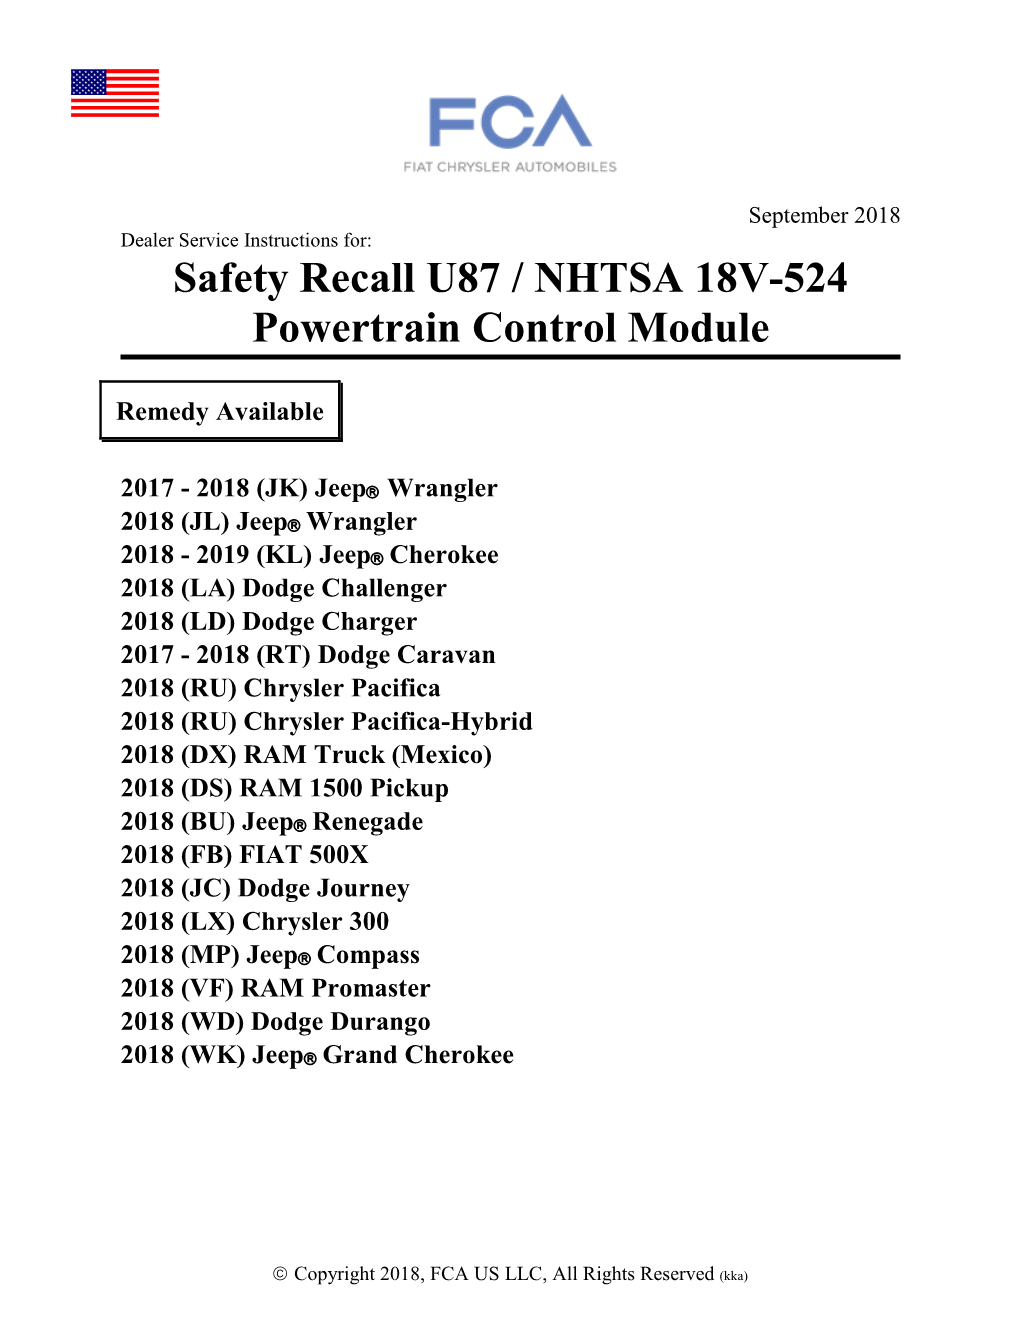 Safety Recall U87 / NHTSA 18V-524 Powertrain Control Module